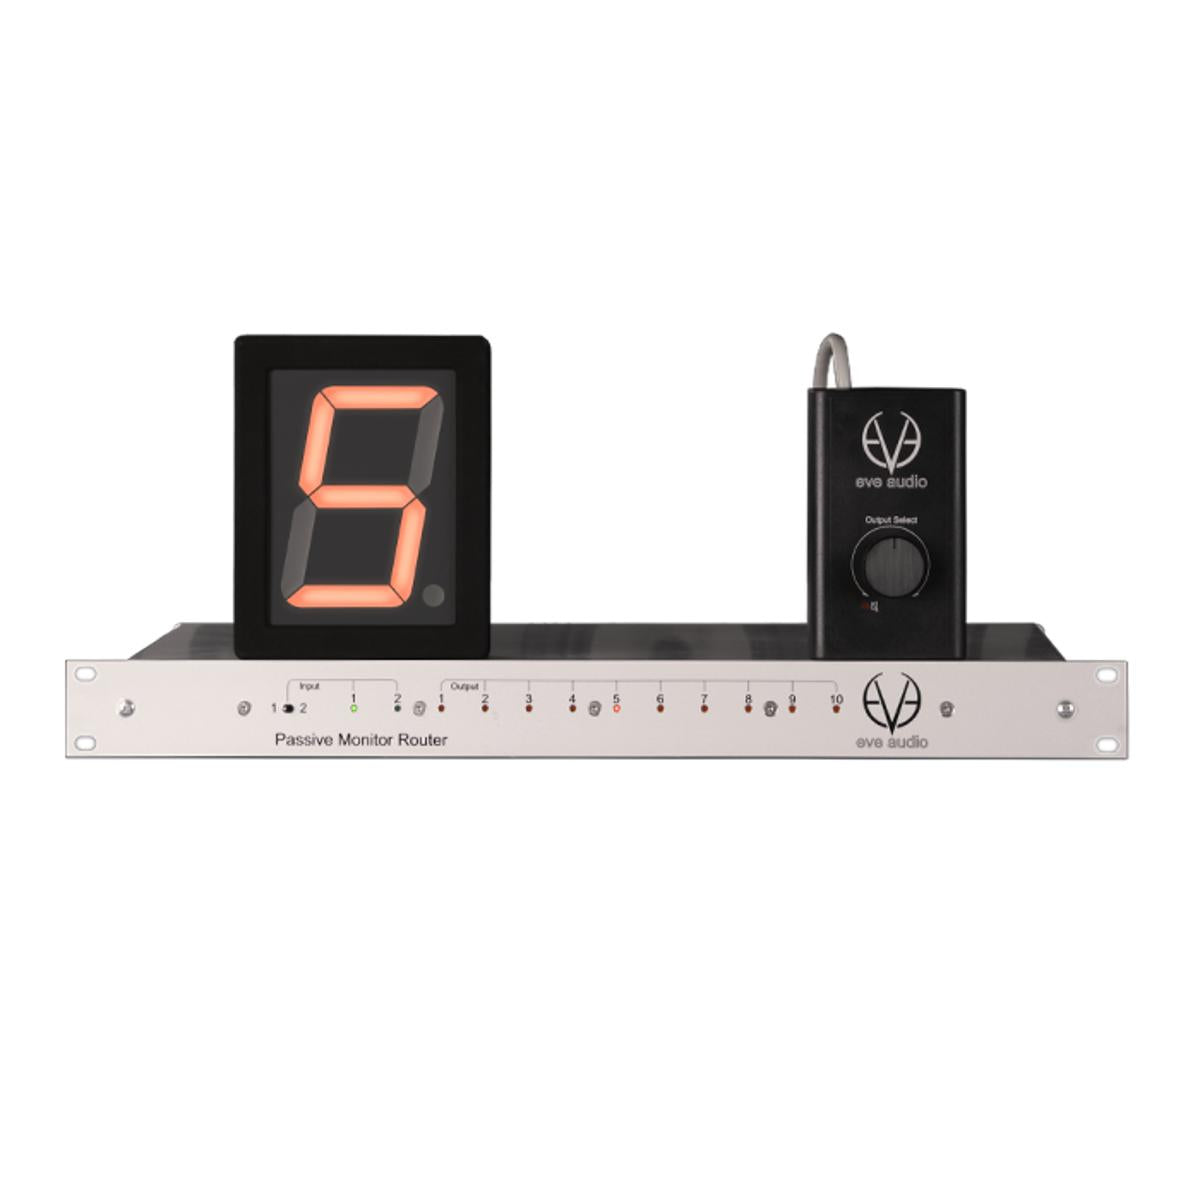 Eve Audio PMR 2.10 Passive Monitor Router - upto 10 Pairs